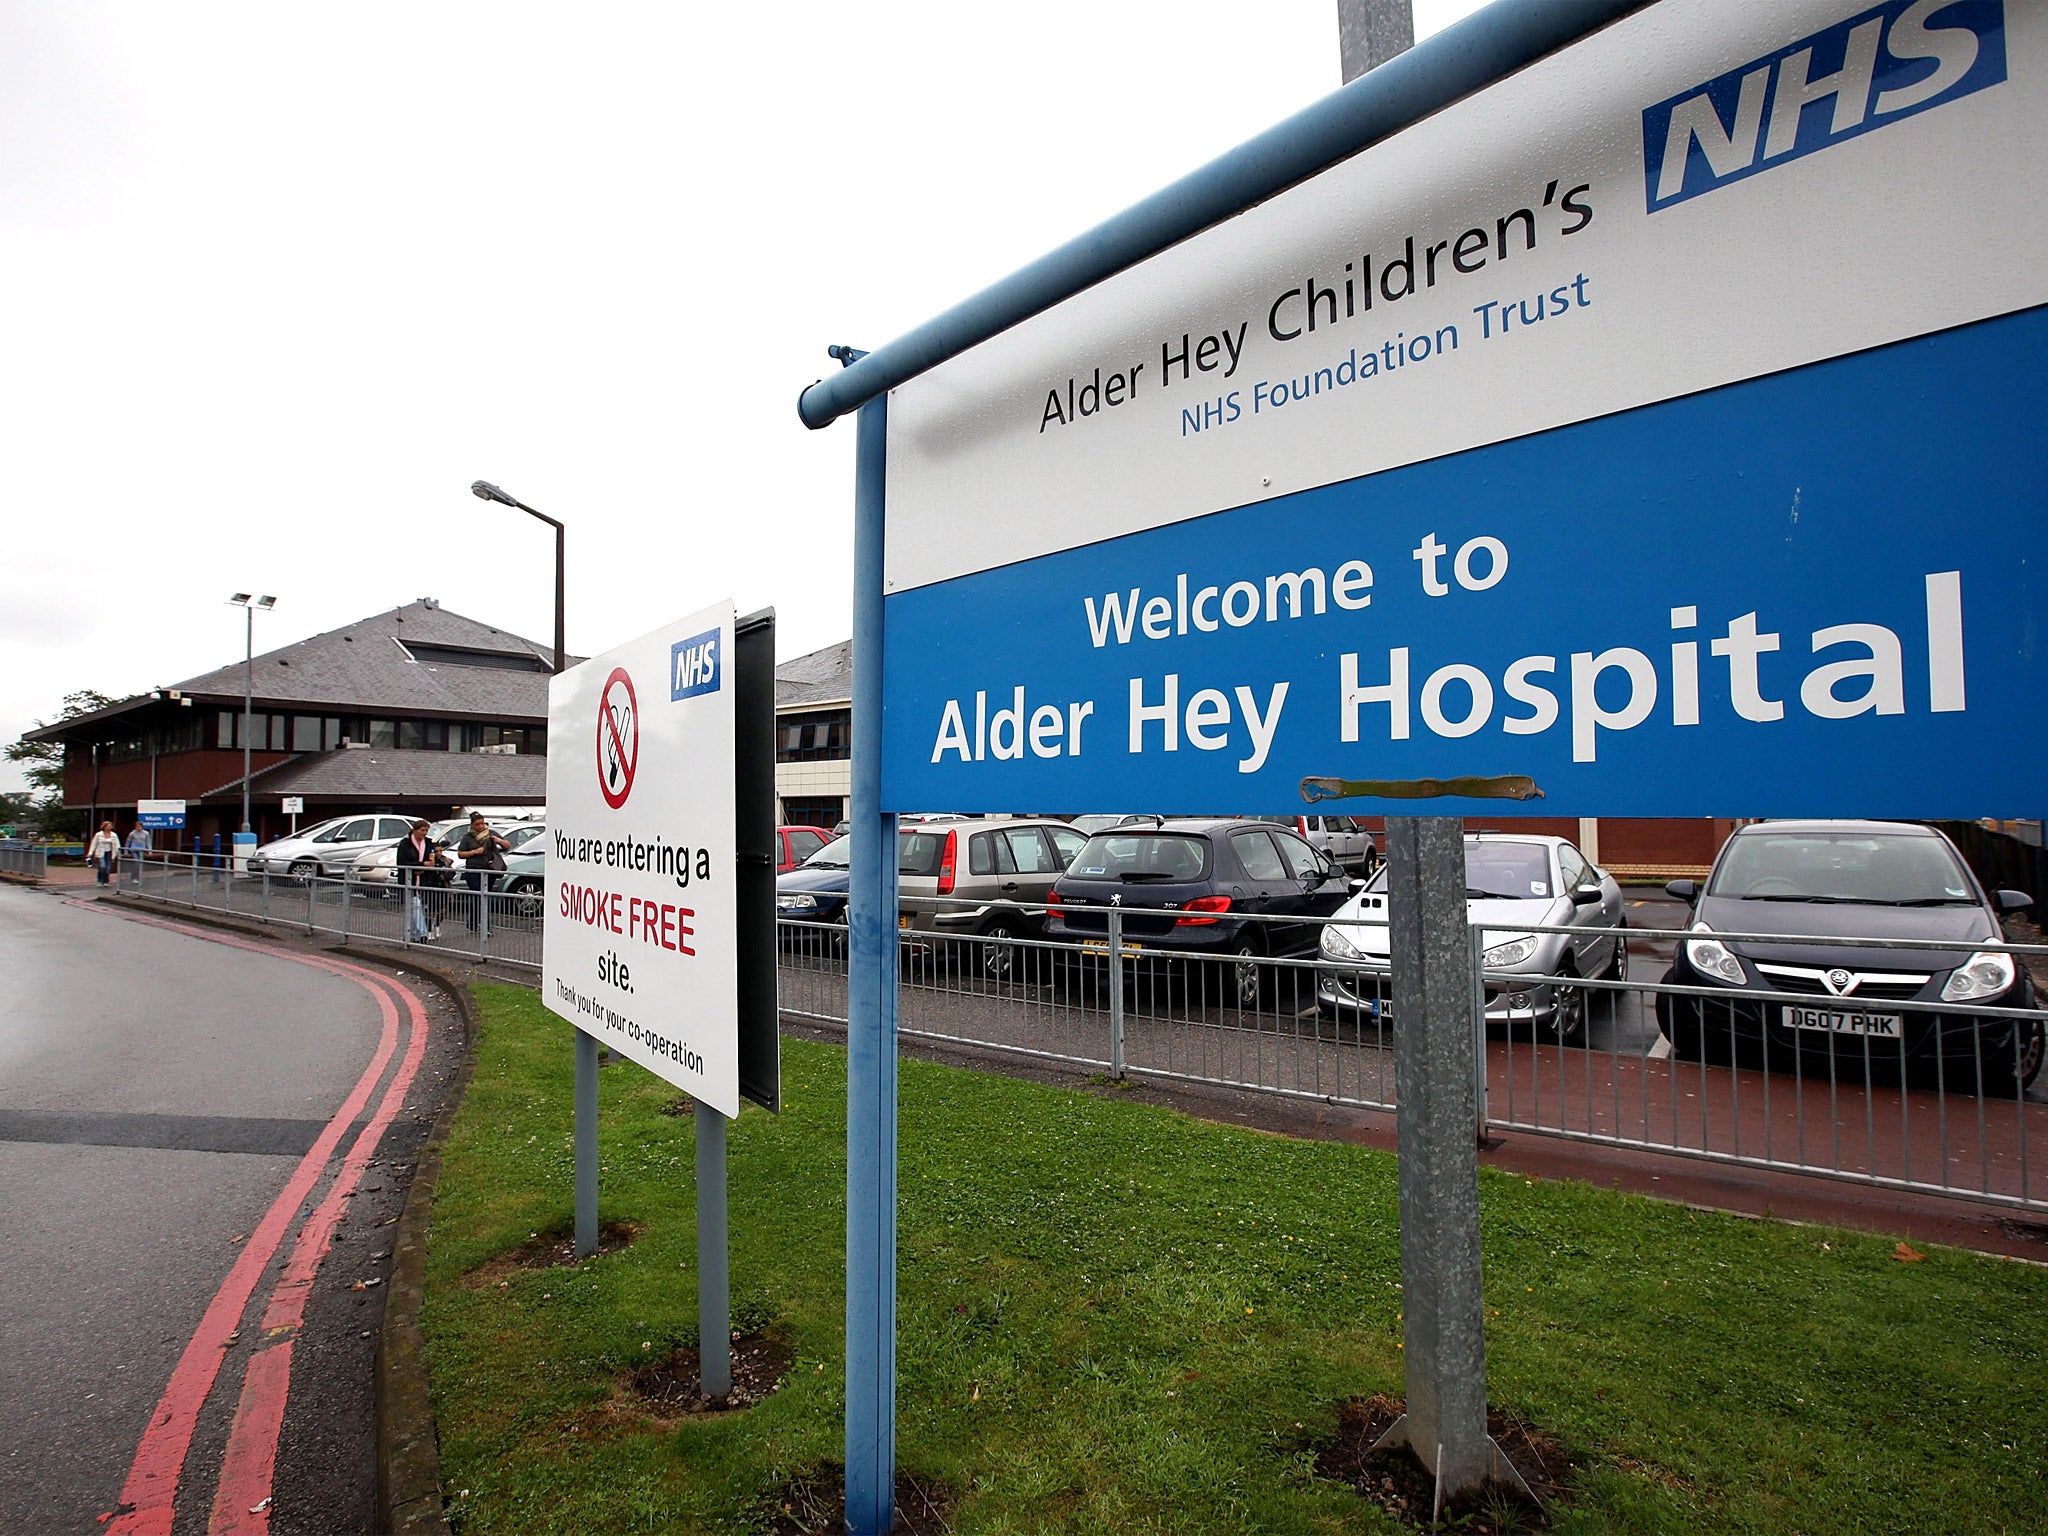 Alder Hey Children's Hospital in Liverpool